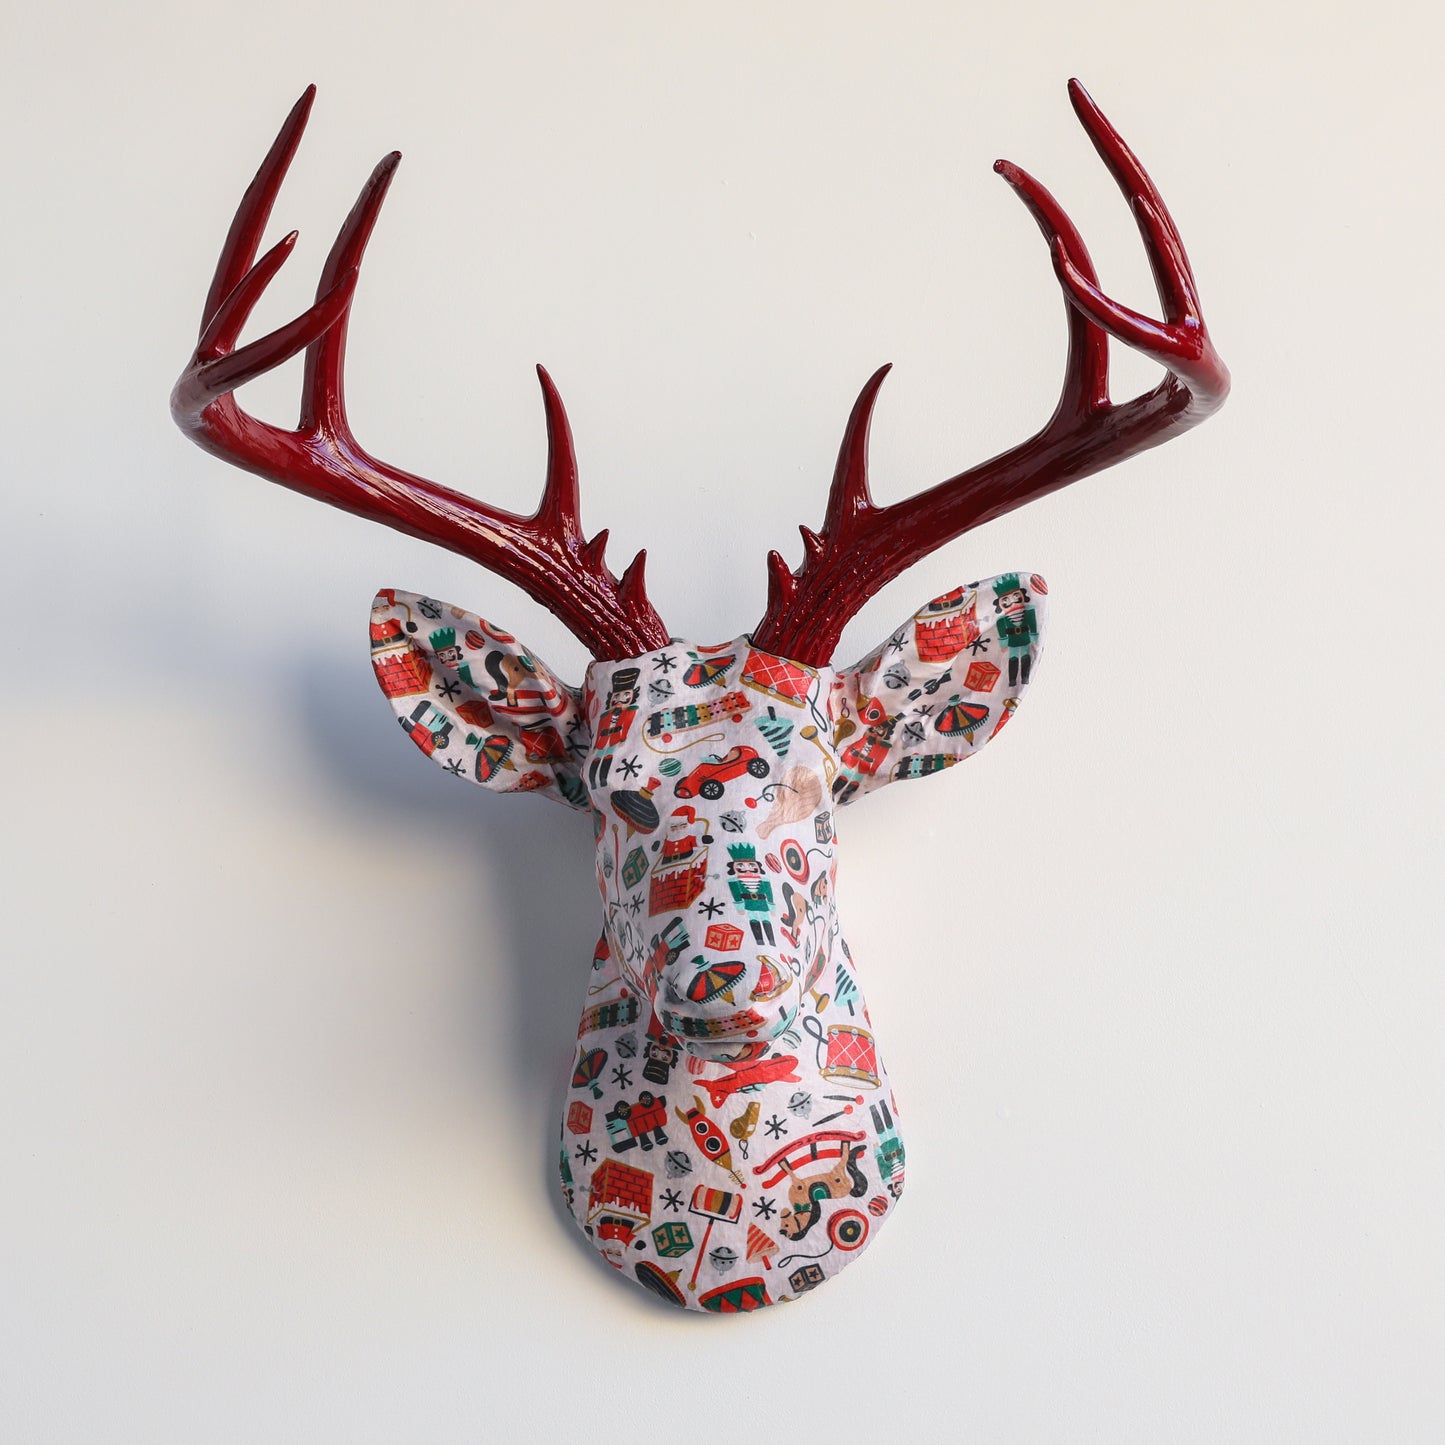 Fabric Deer Head - Retro Christmas Toys Fabric Deer Head